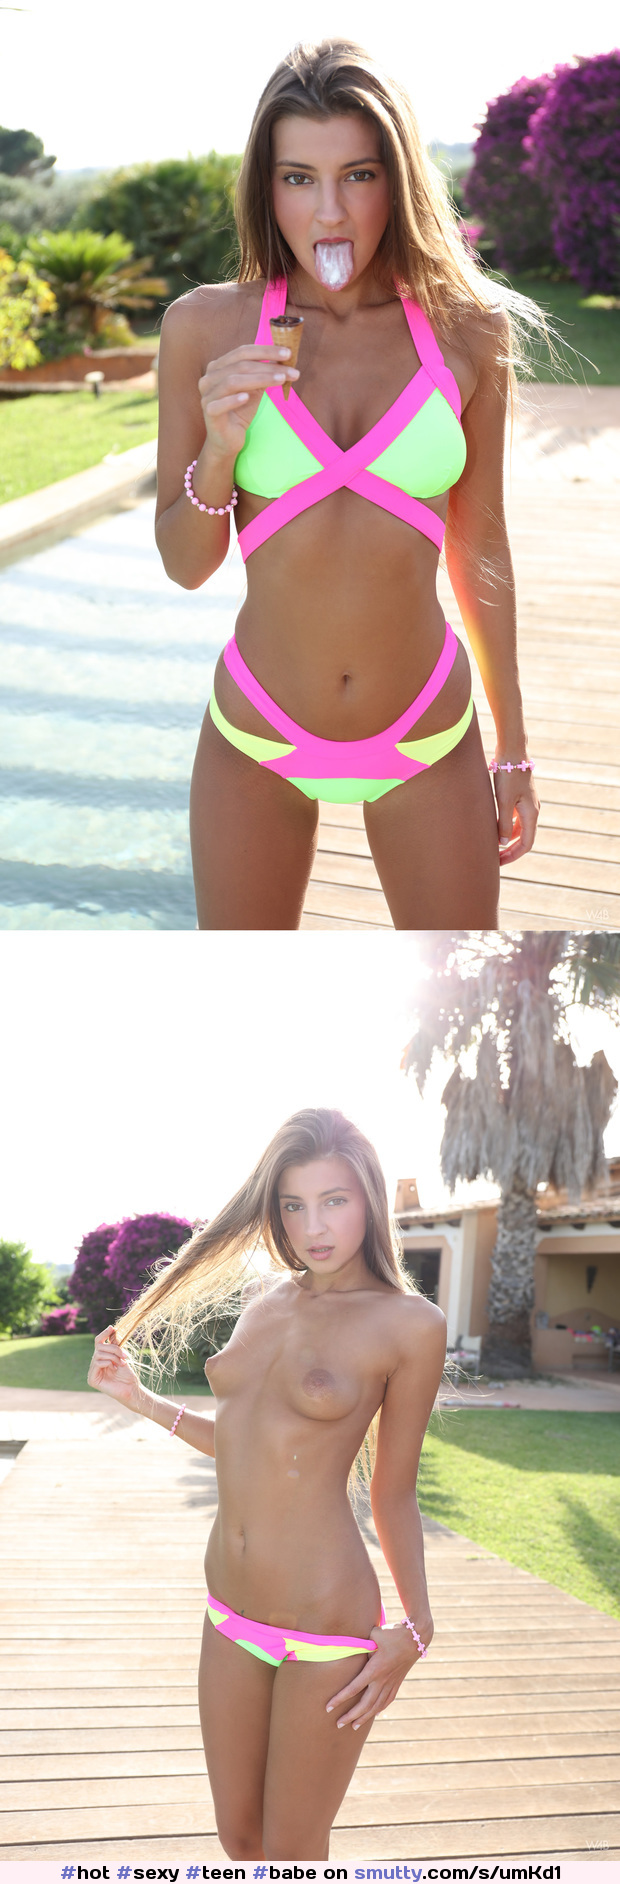 #hot#sexy#teen#babe#beautifulgirl#bikini#titsout#naughty#collegegirl